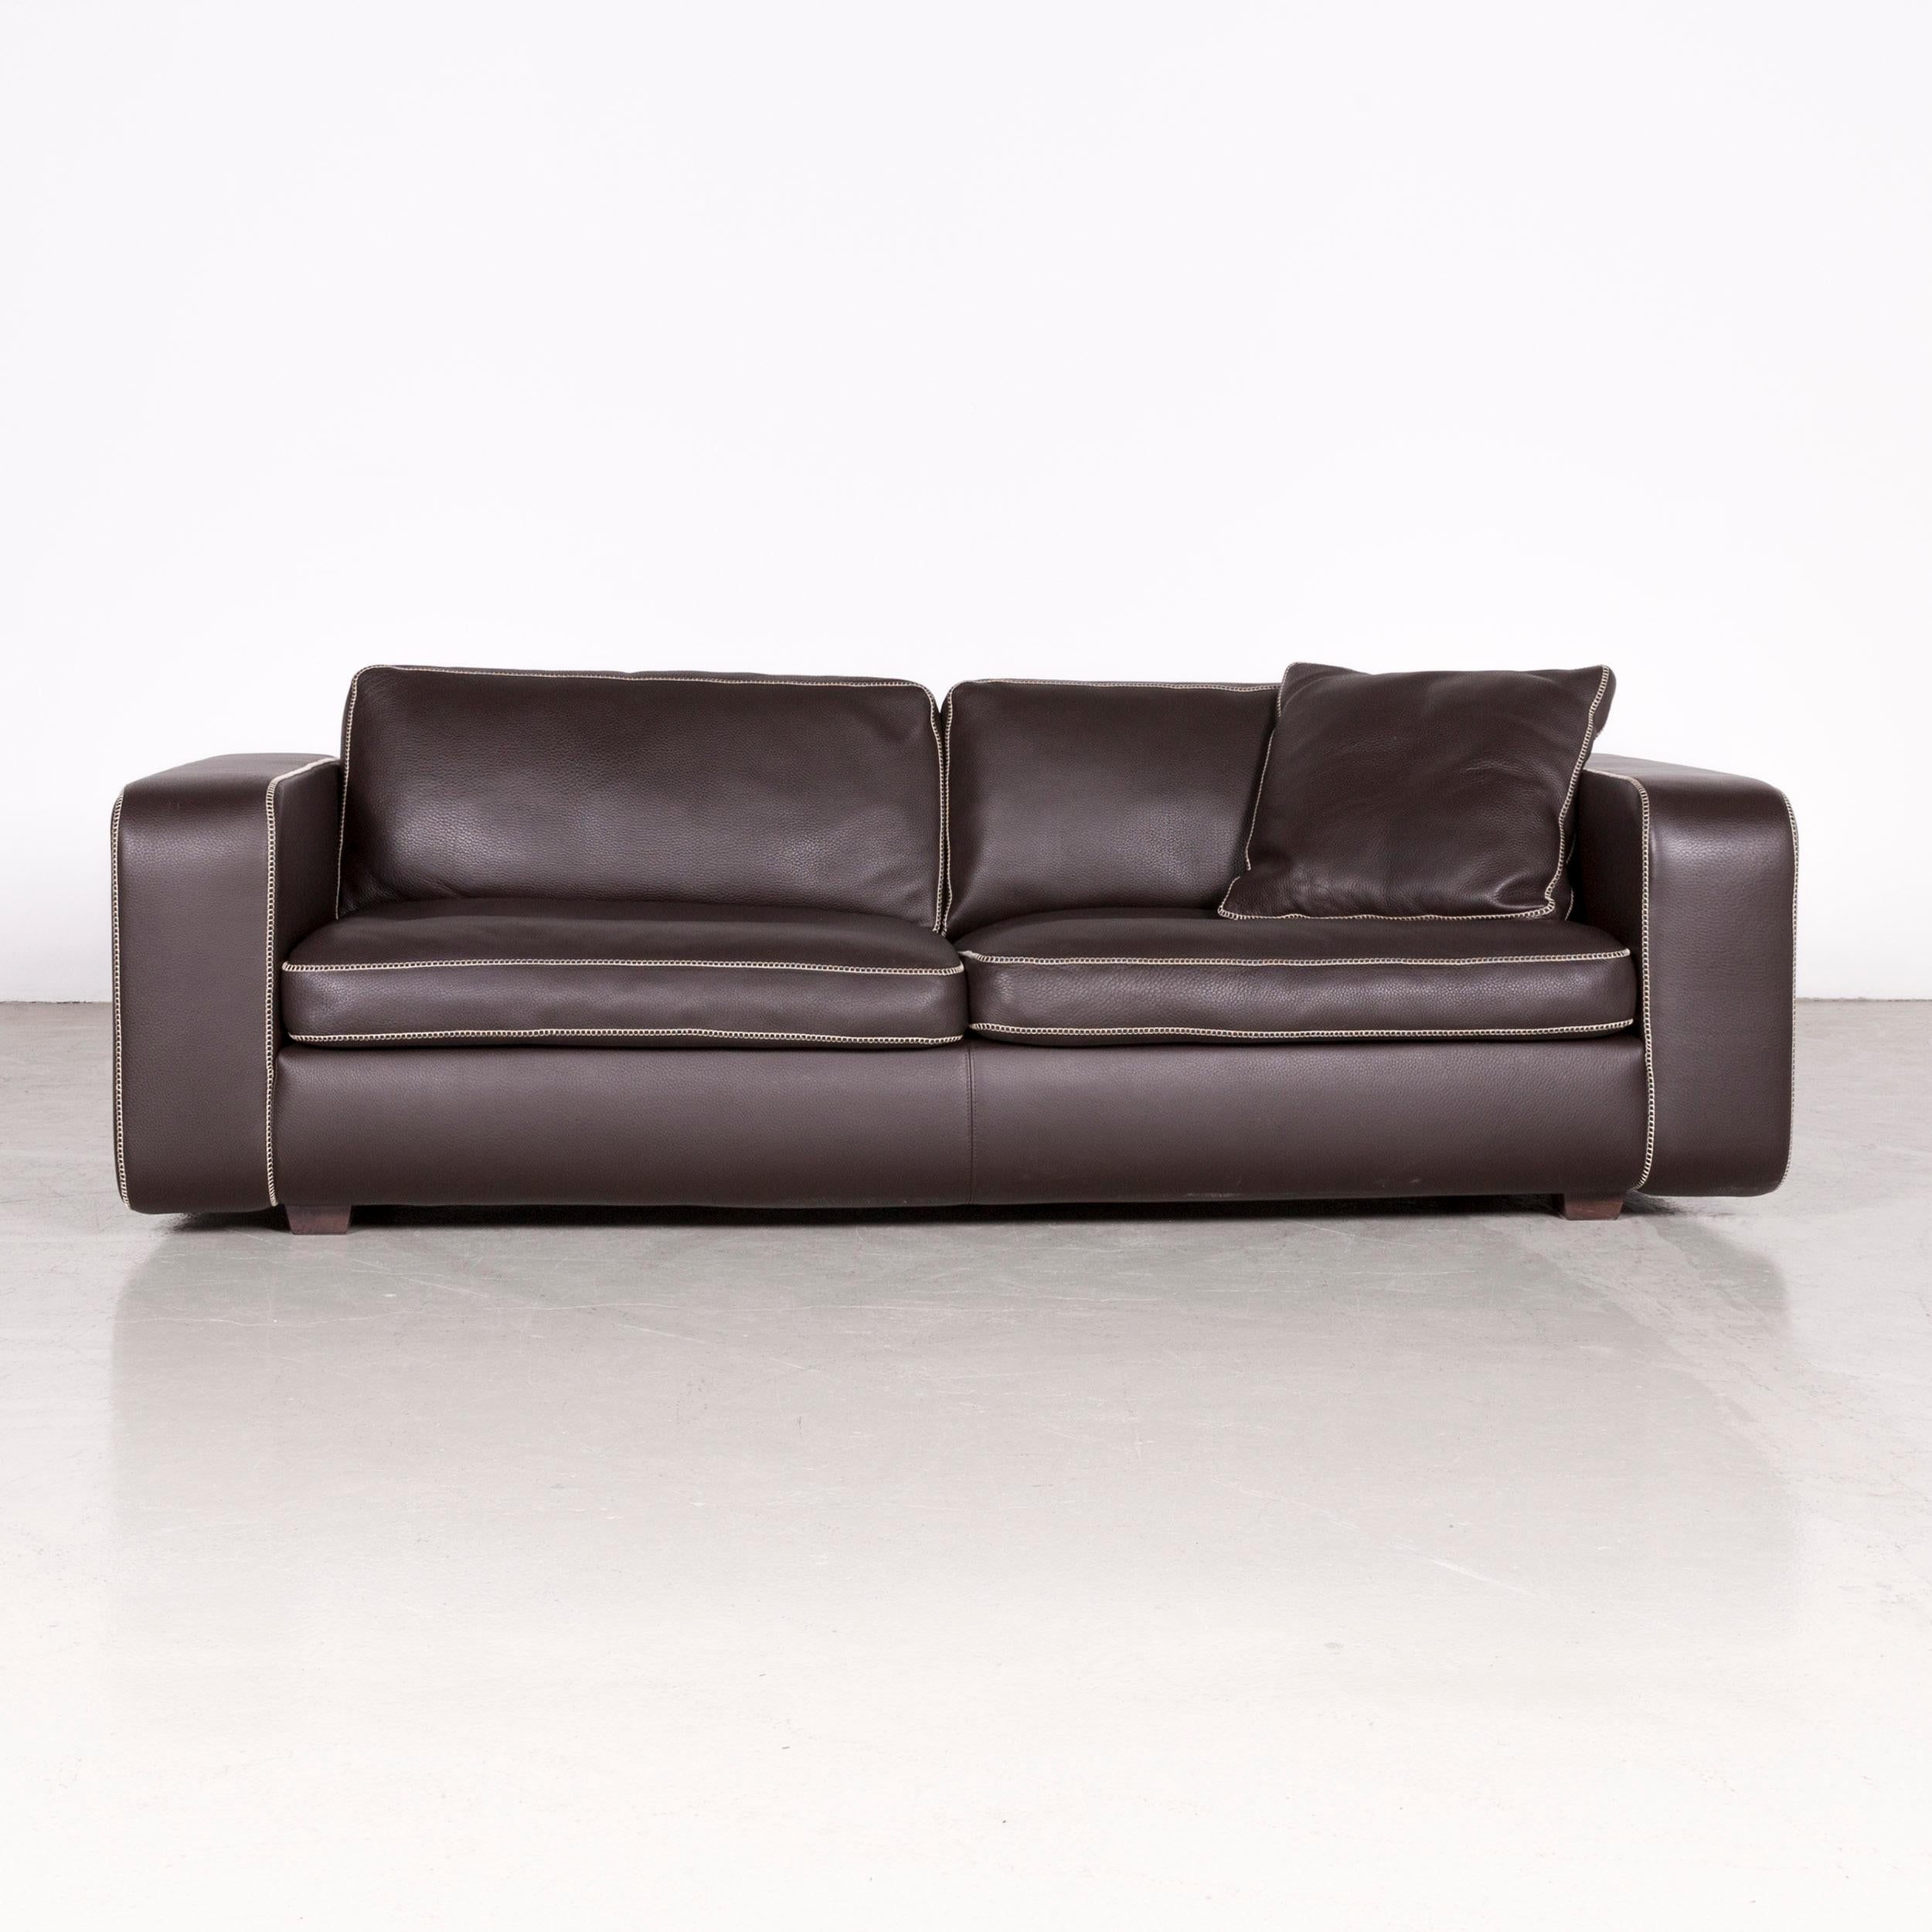 Machalke Valentino designer leather sofa footstool set brown three-seat couch.